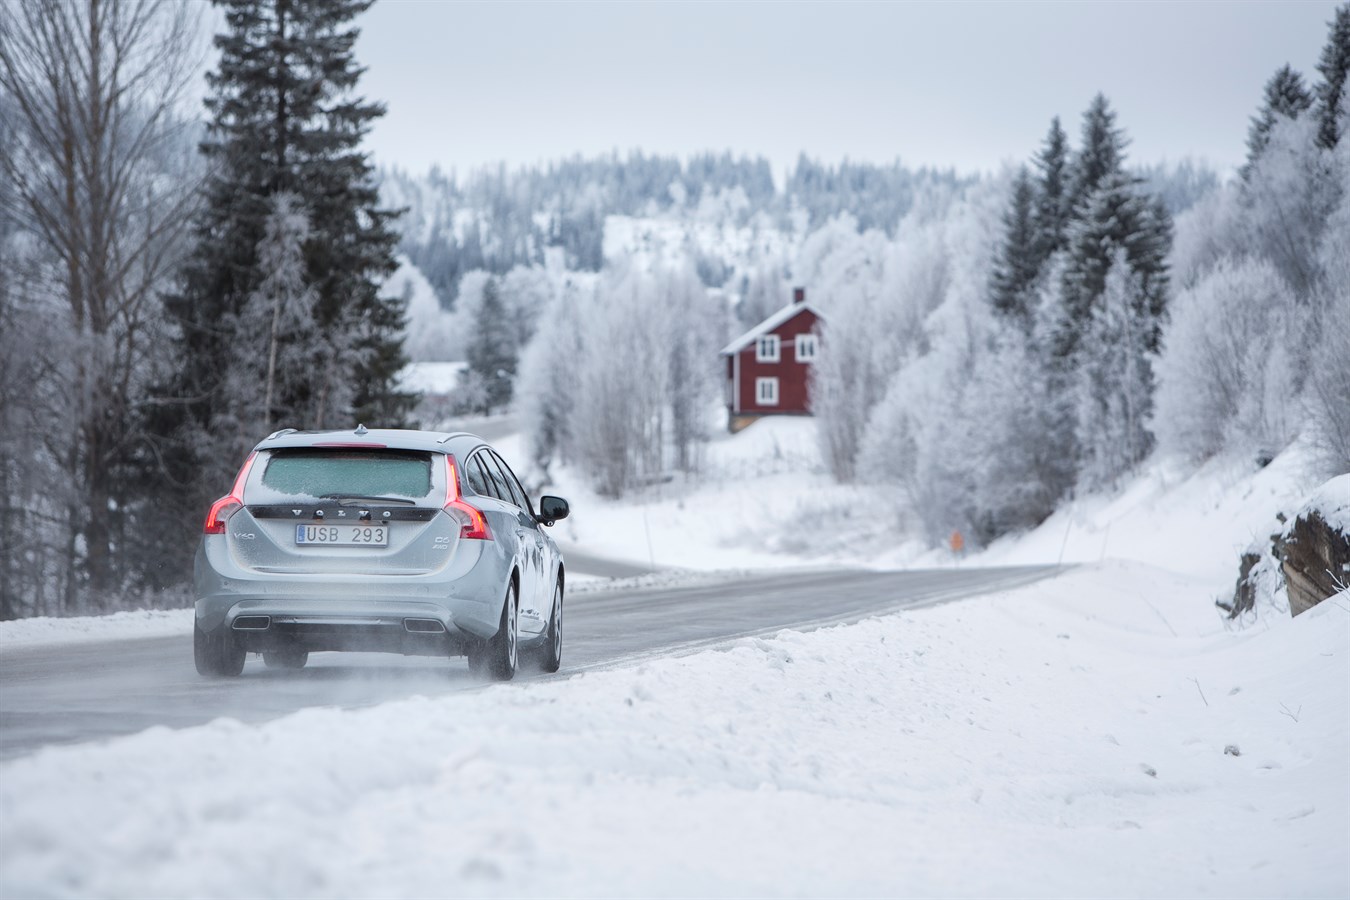 The Volvo V60 Plug-in Hybrid in northern Sweden